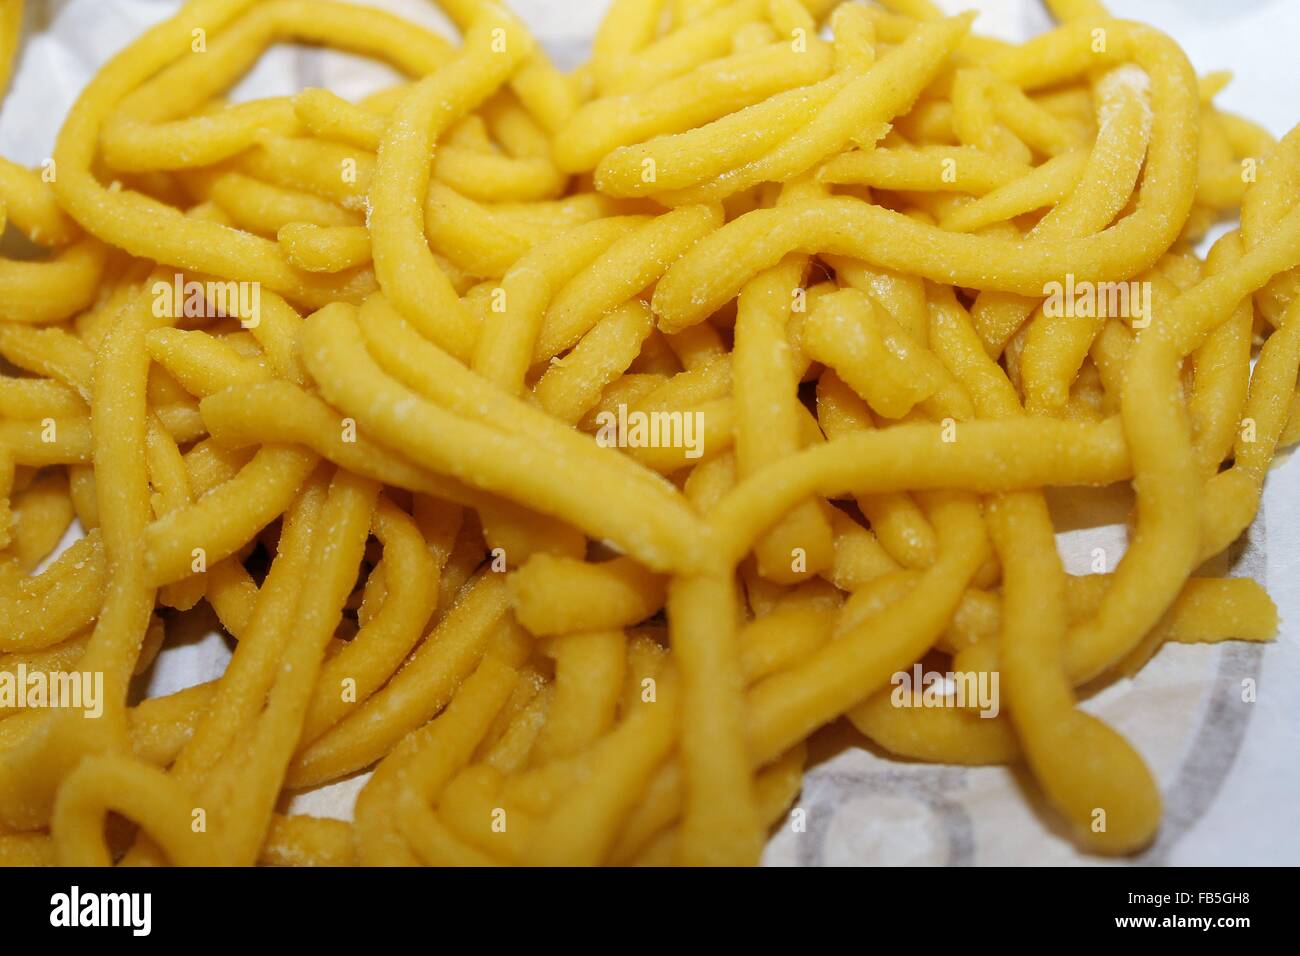 https://c8.alamy.com/compes/fb5gh8/pasta-fresca-de-cerca-y-de-textura-de-fideos-caseros-fb5gh8.jpg